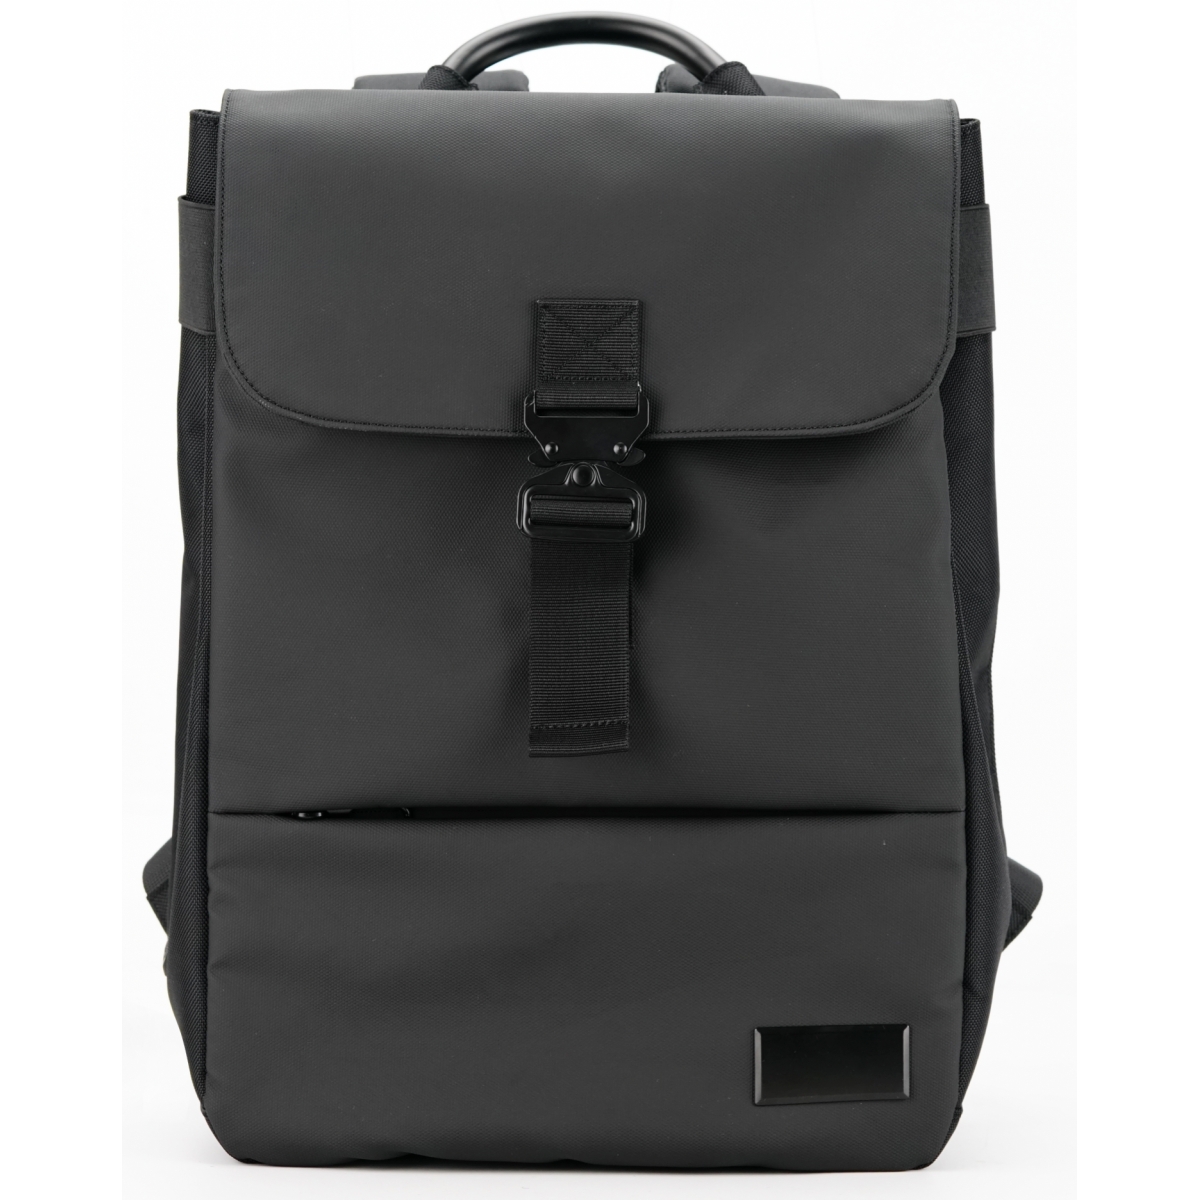 L11 - City backpack